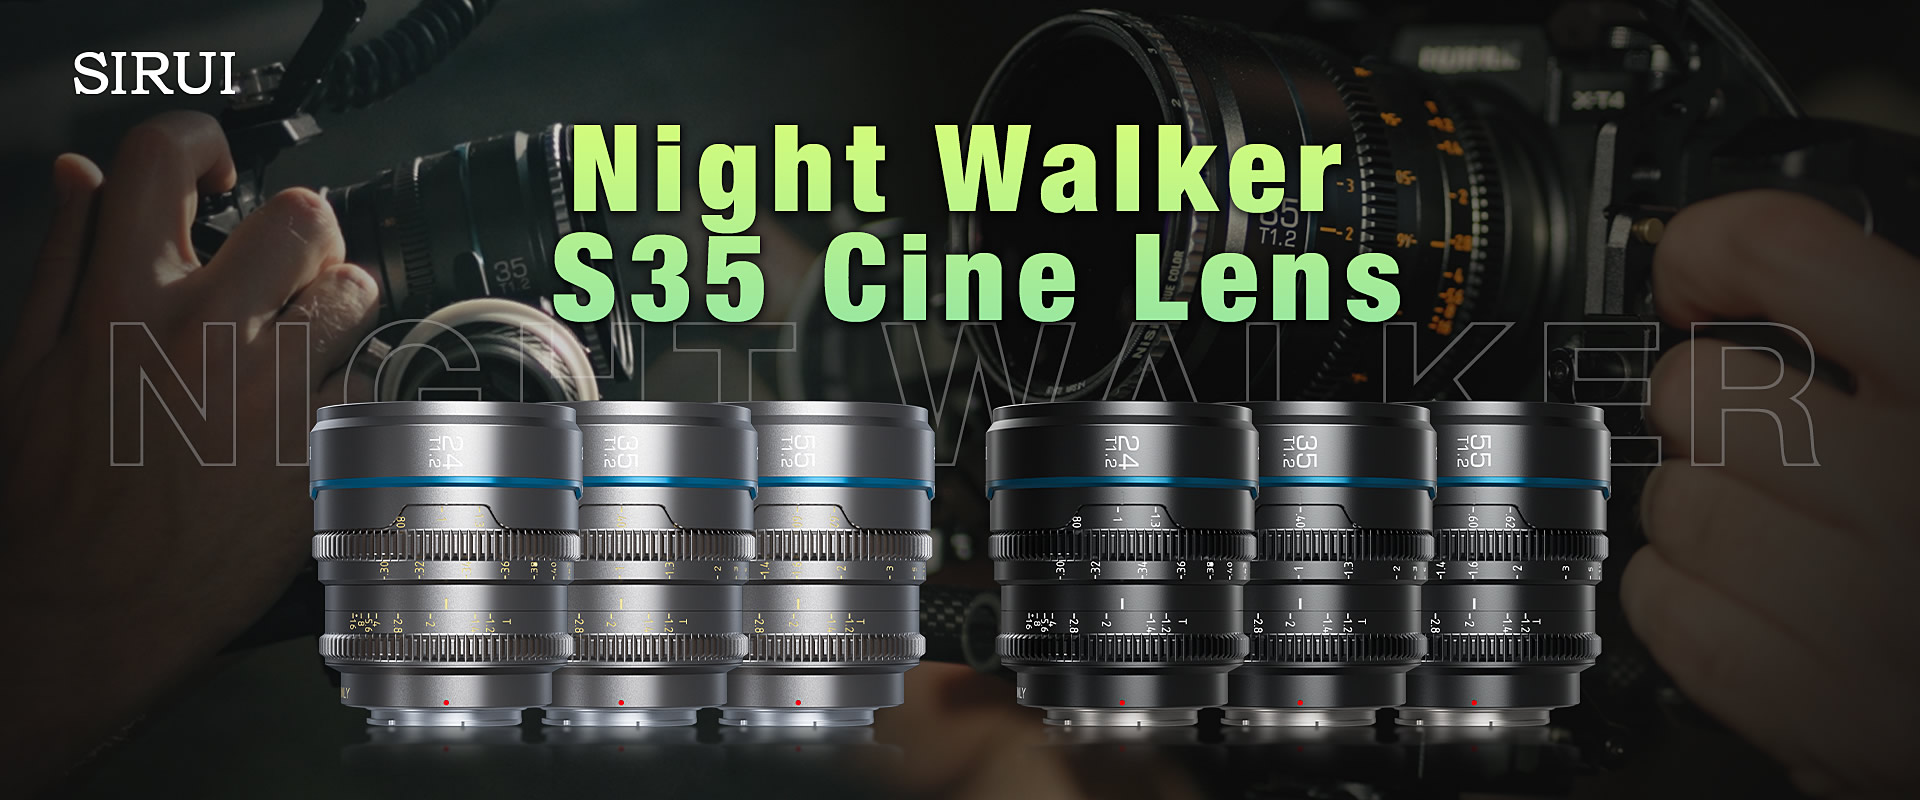 SIRUI Night Walker T1.2 S35 Cine Lens Series